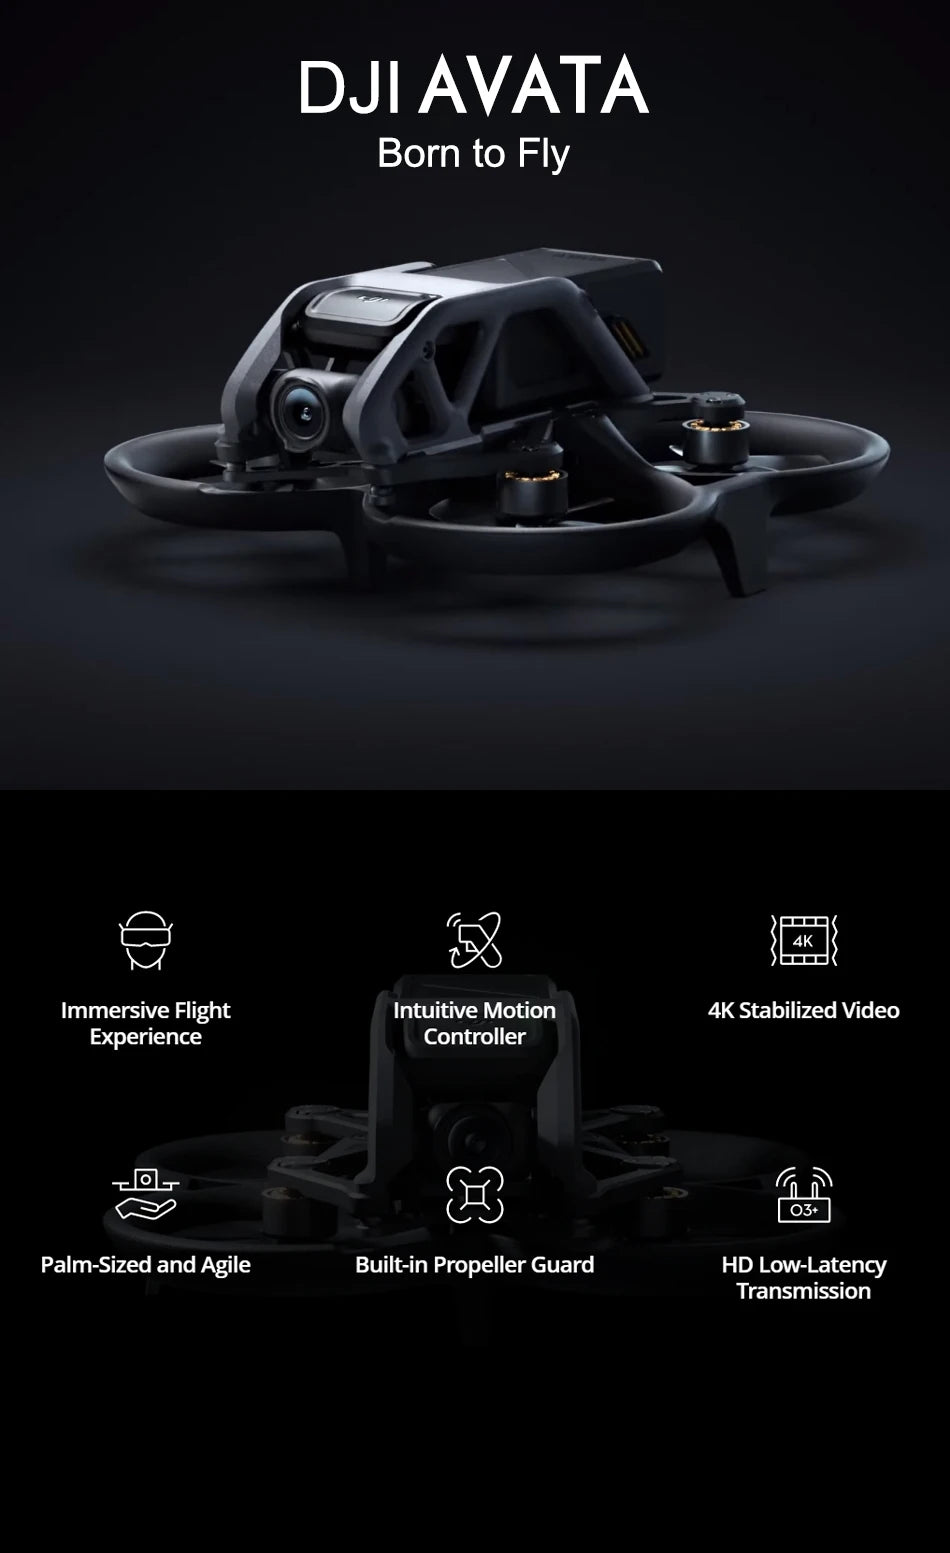 DJI Avata FPV Drone, DJI AVATA Born to 4K Immersive Flight Intuitive Motion